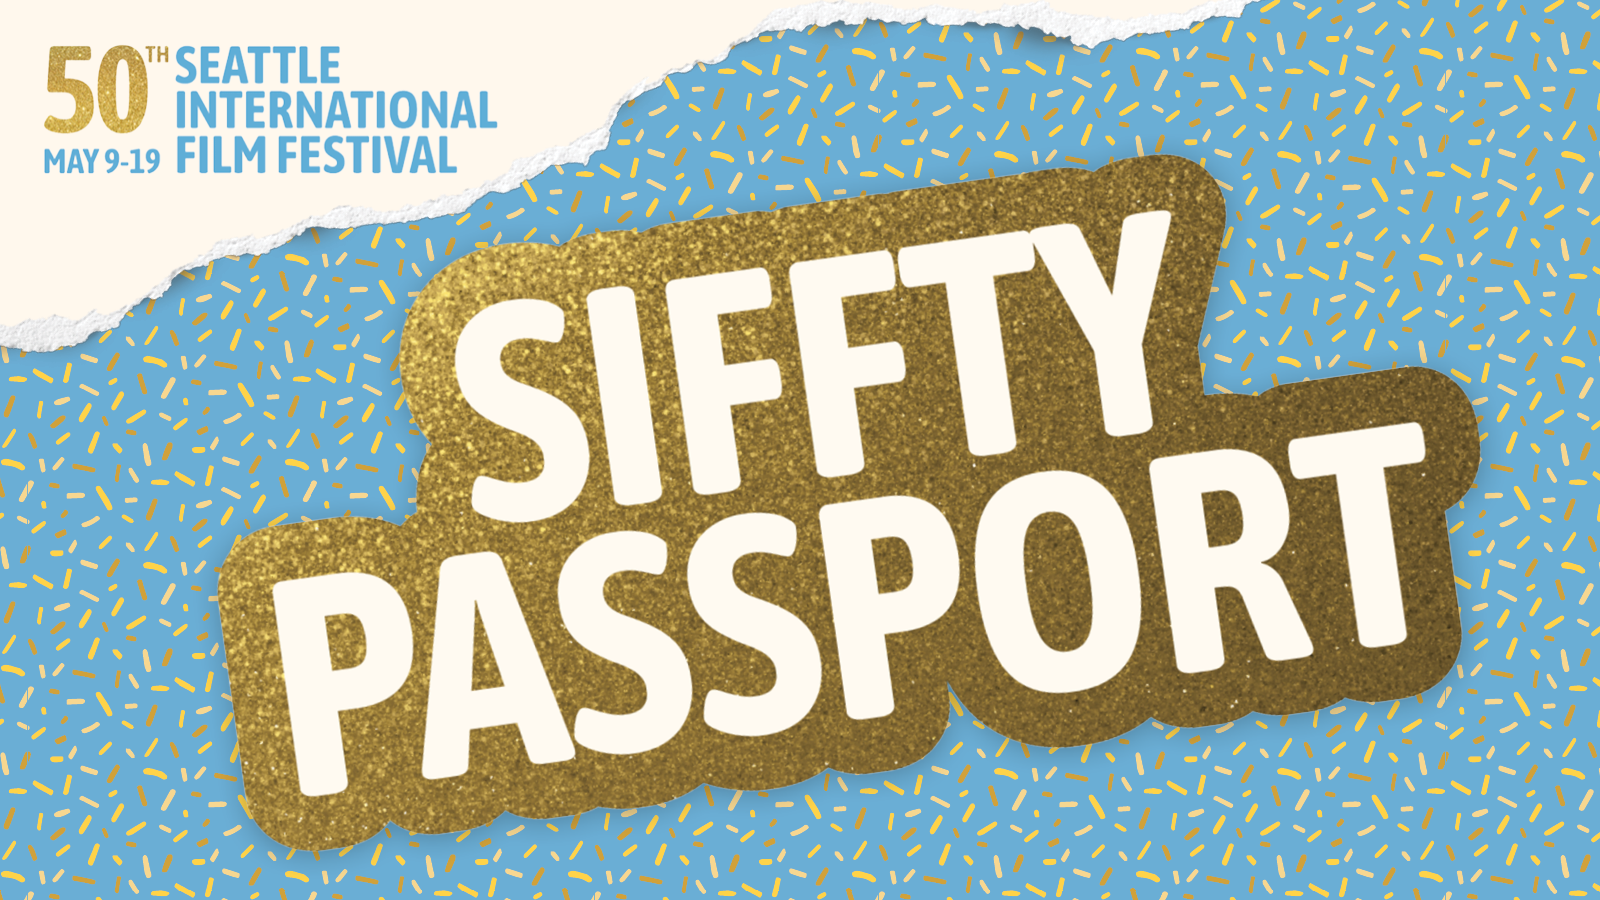 Festival Passport